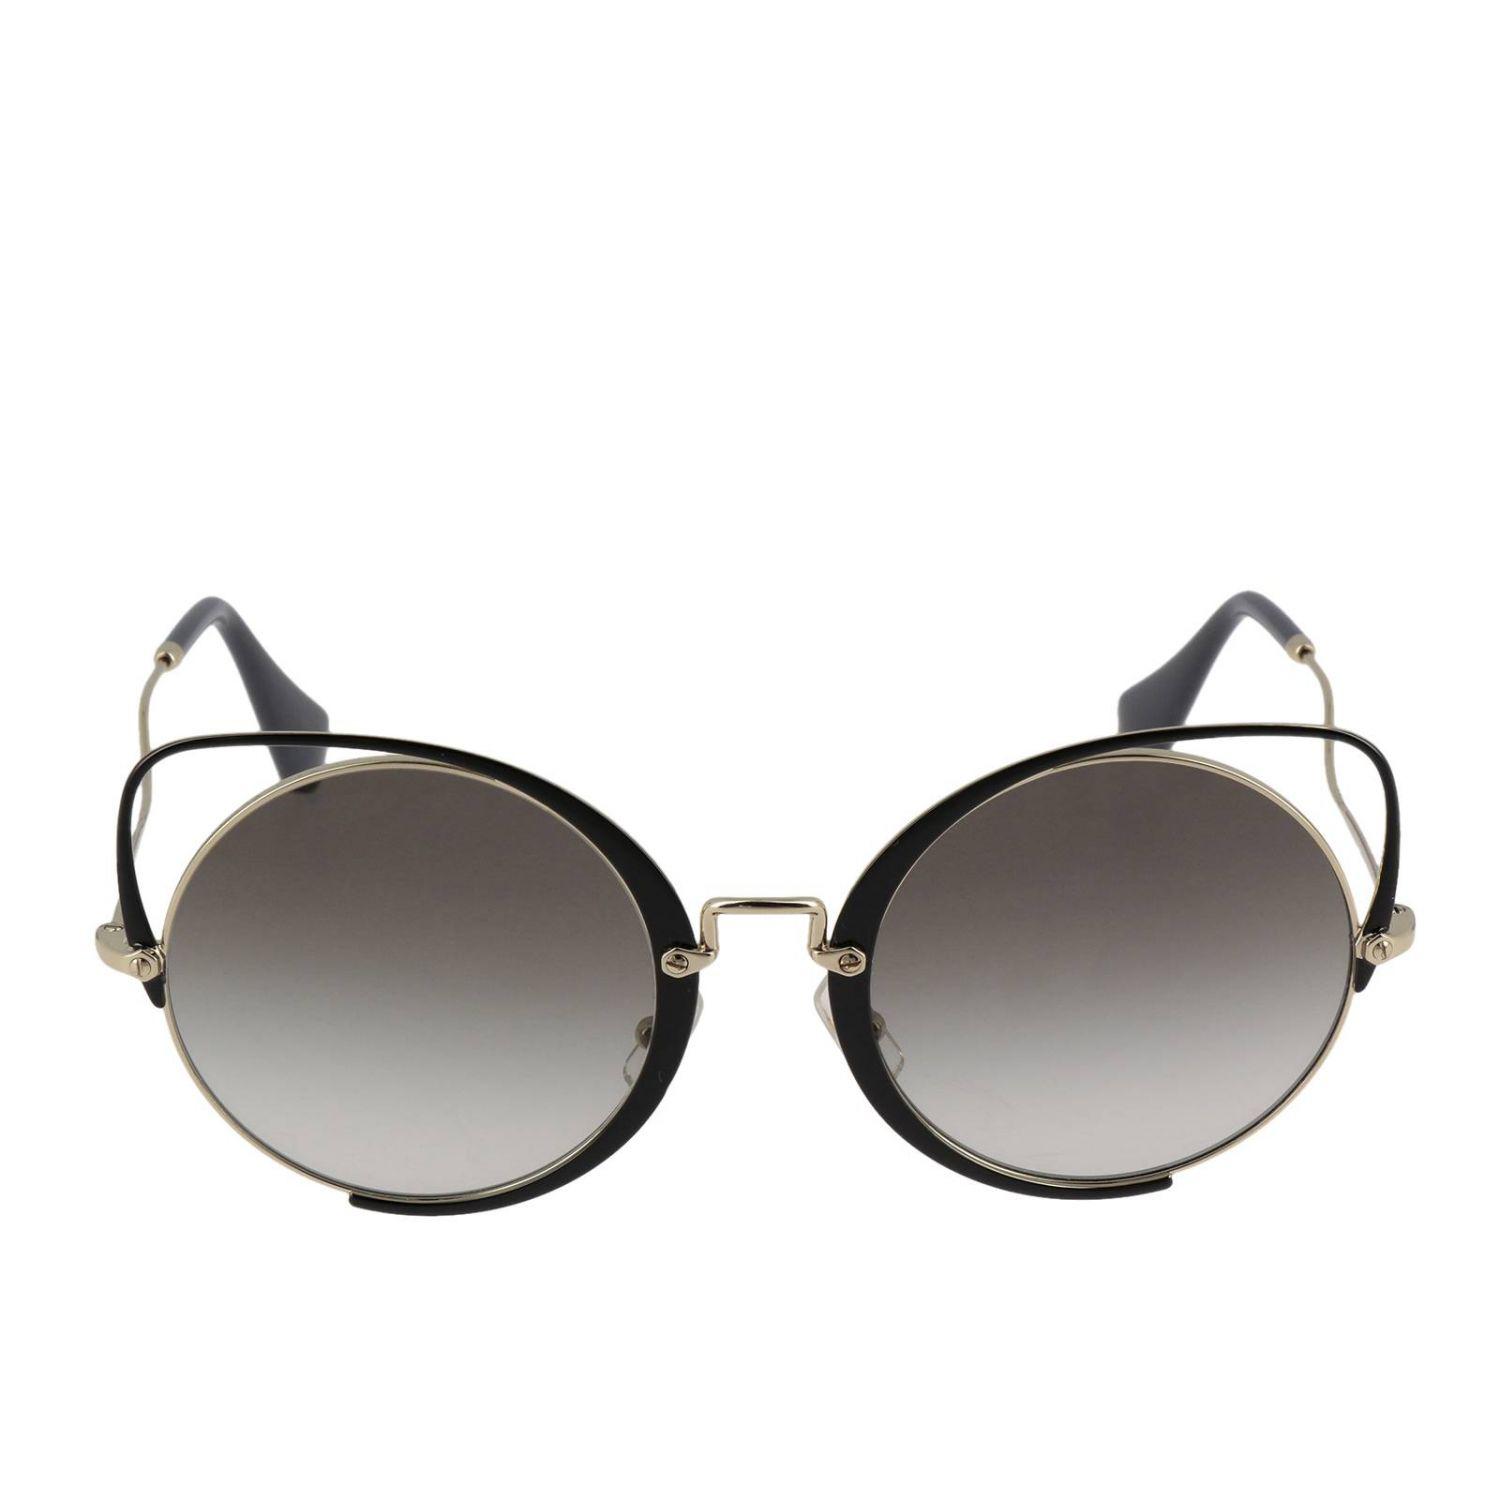 Miu Miu Sunglasses Women in Smoke Grey (Gray) - Lyst